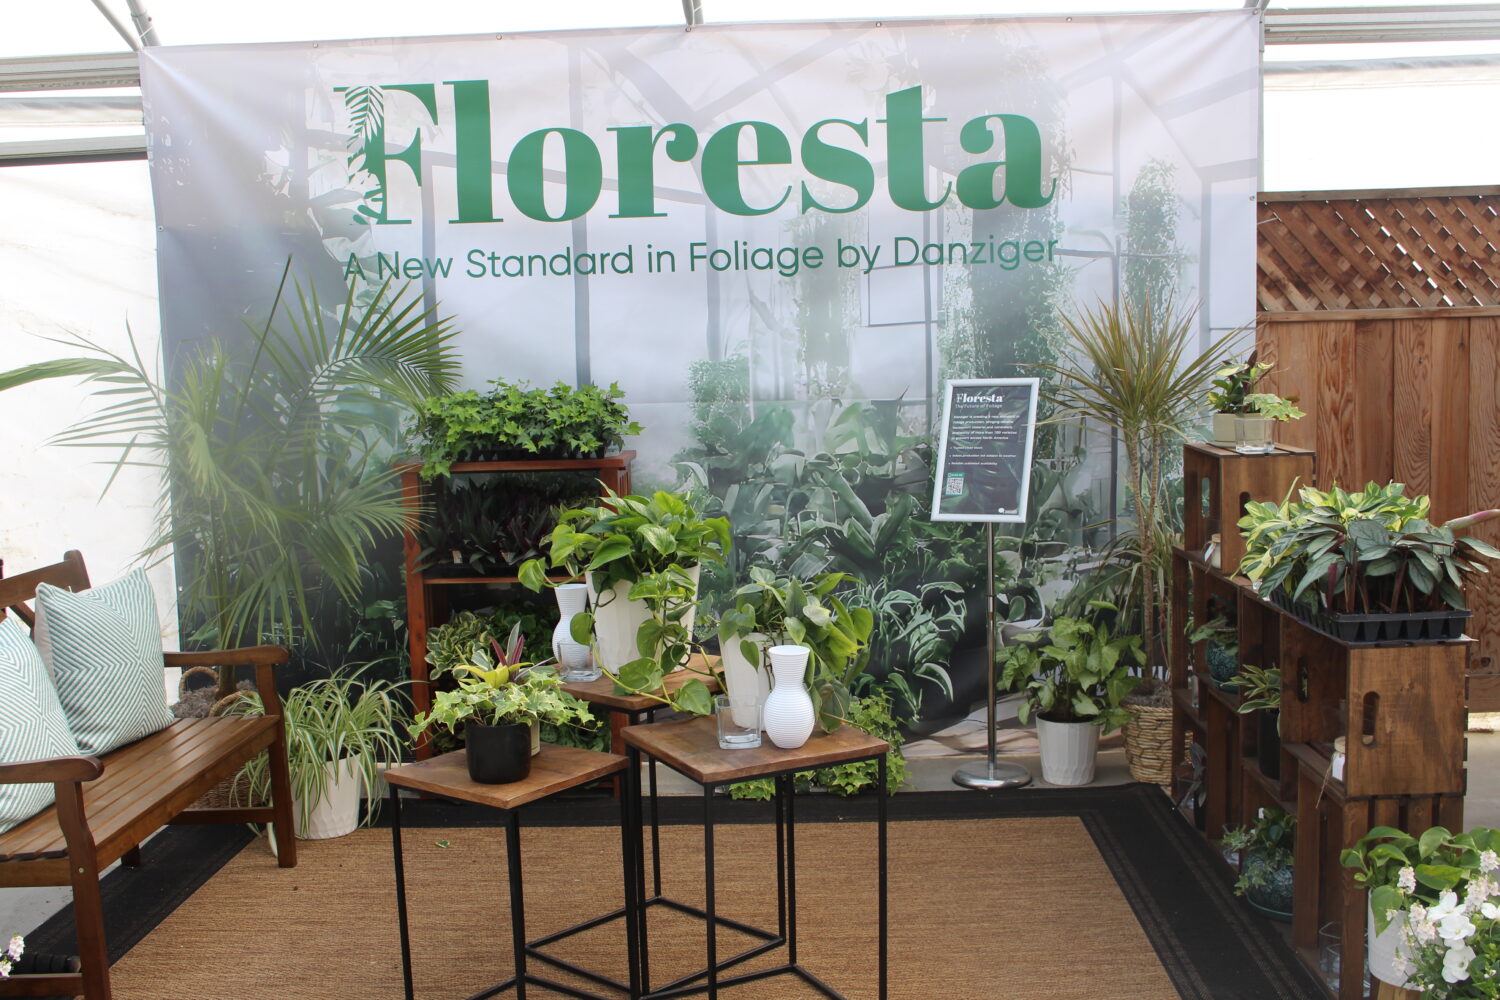 Danziger's Floresta foliage program arranged in a retail-worthy display.